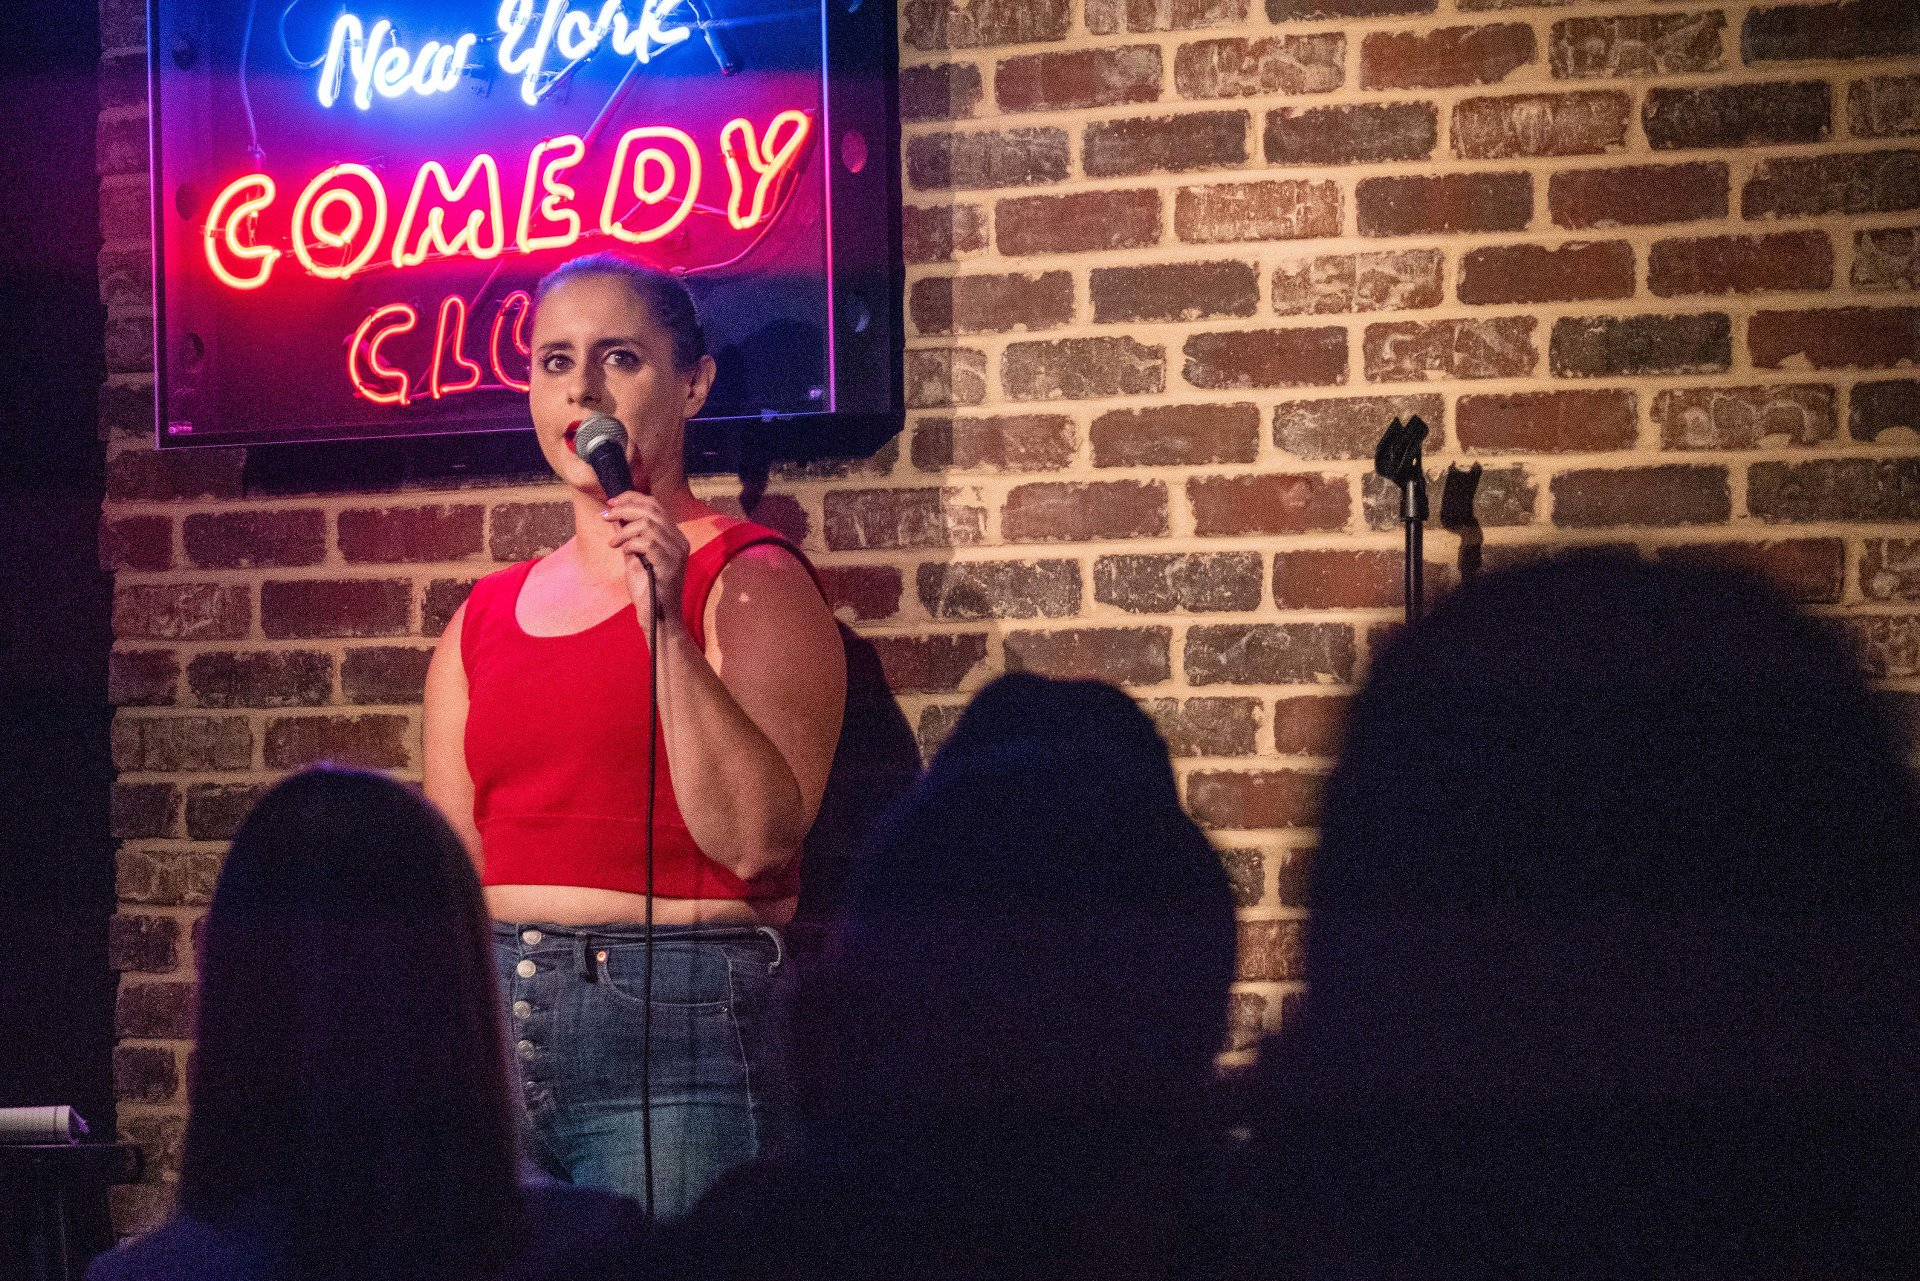 Source: https://newyorkcomedyclub.com/blog/new-york-comedy-club-celebrates-4th-anniversary   Caption: Comedian on stage at New York Comedy Club